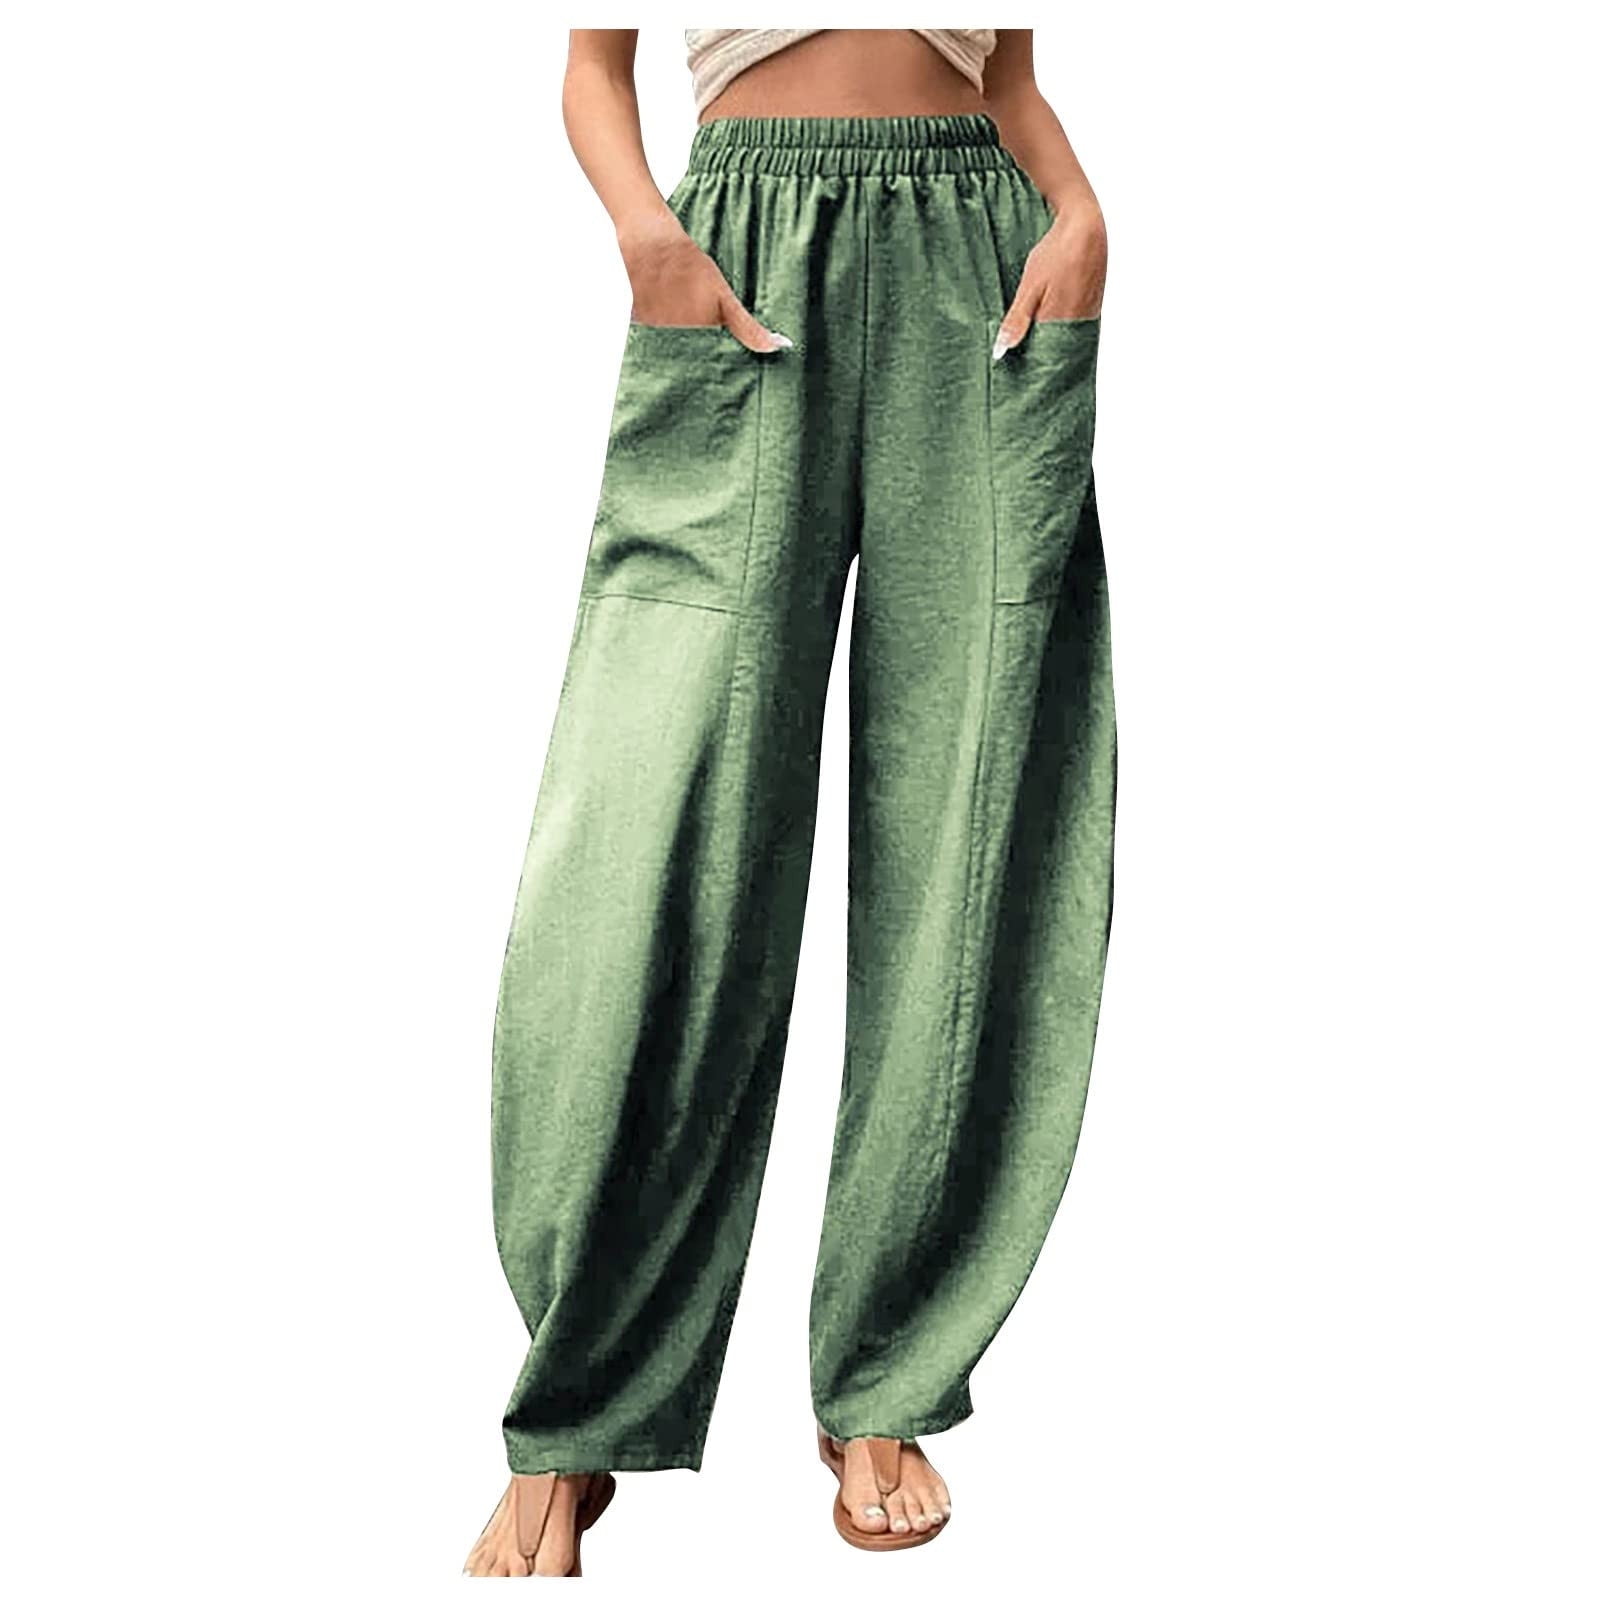 Mrat Linen Pants Women Summer Casual Loose Baggy Pocket Trousers